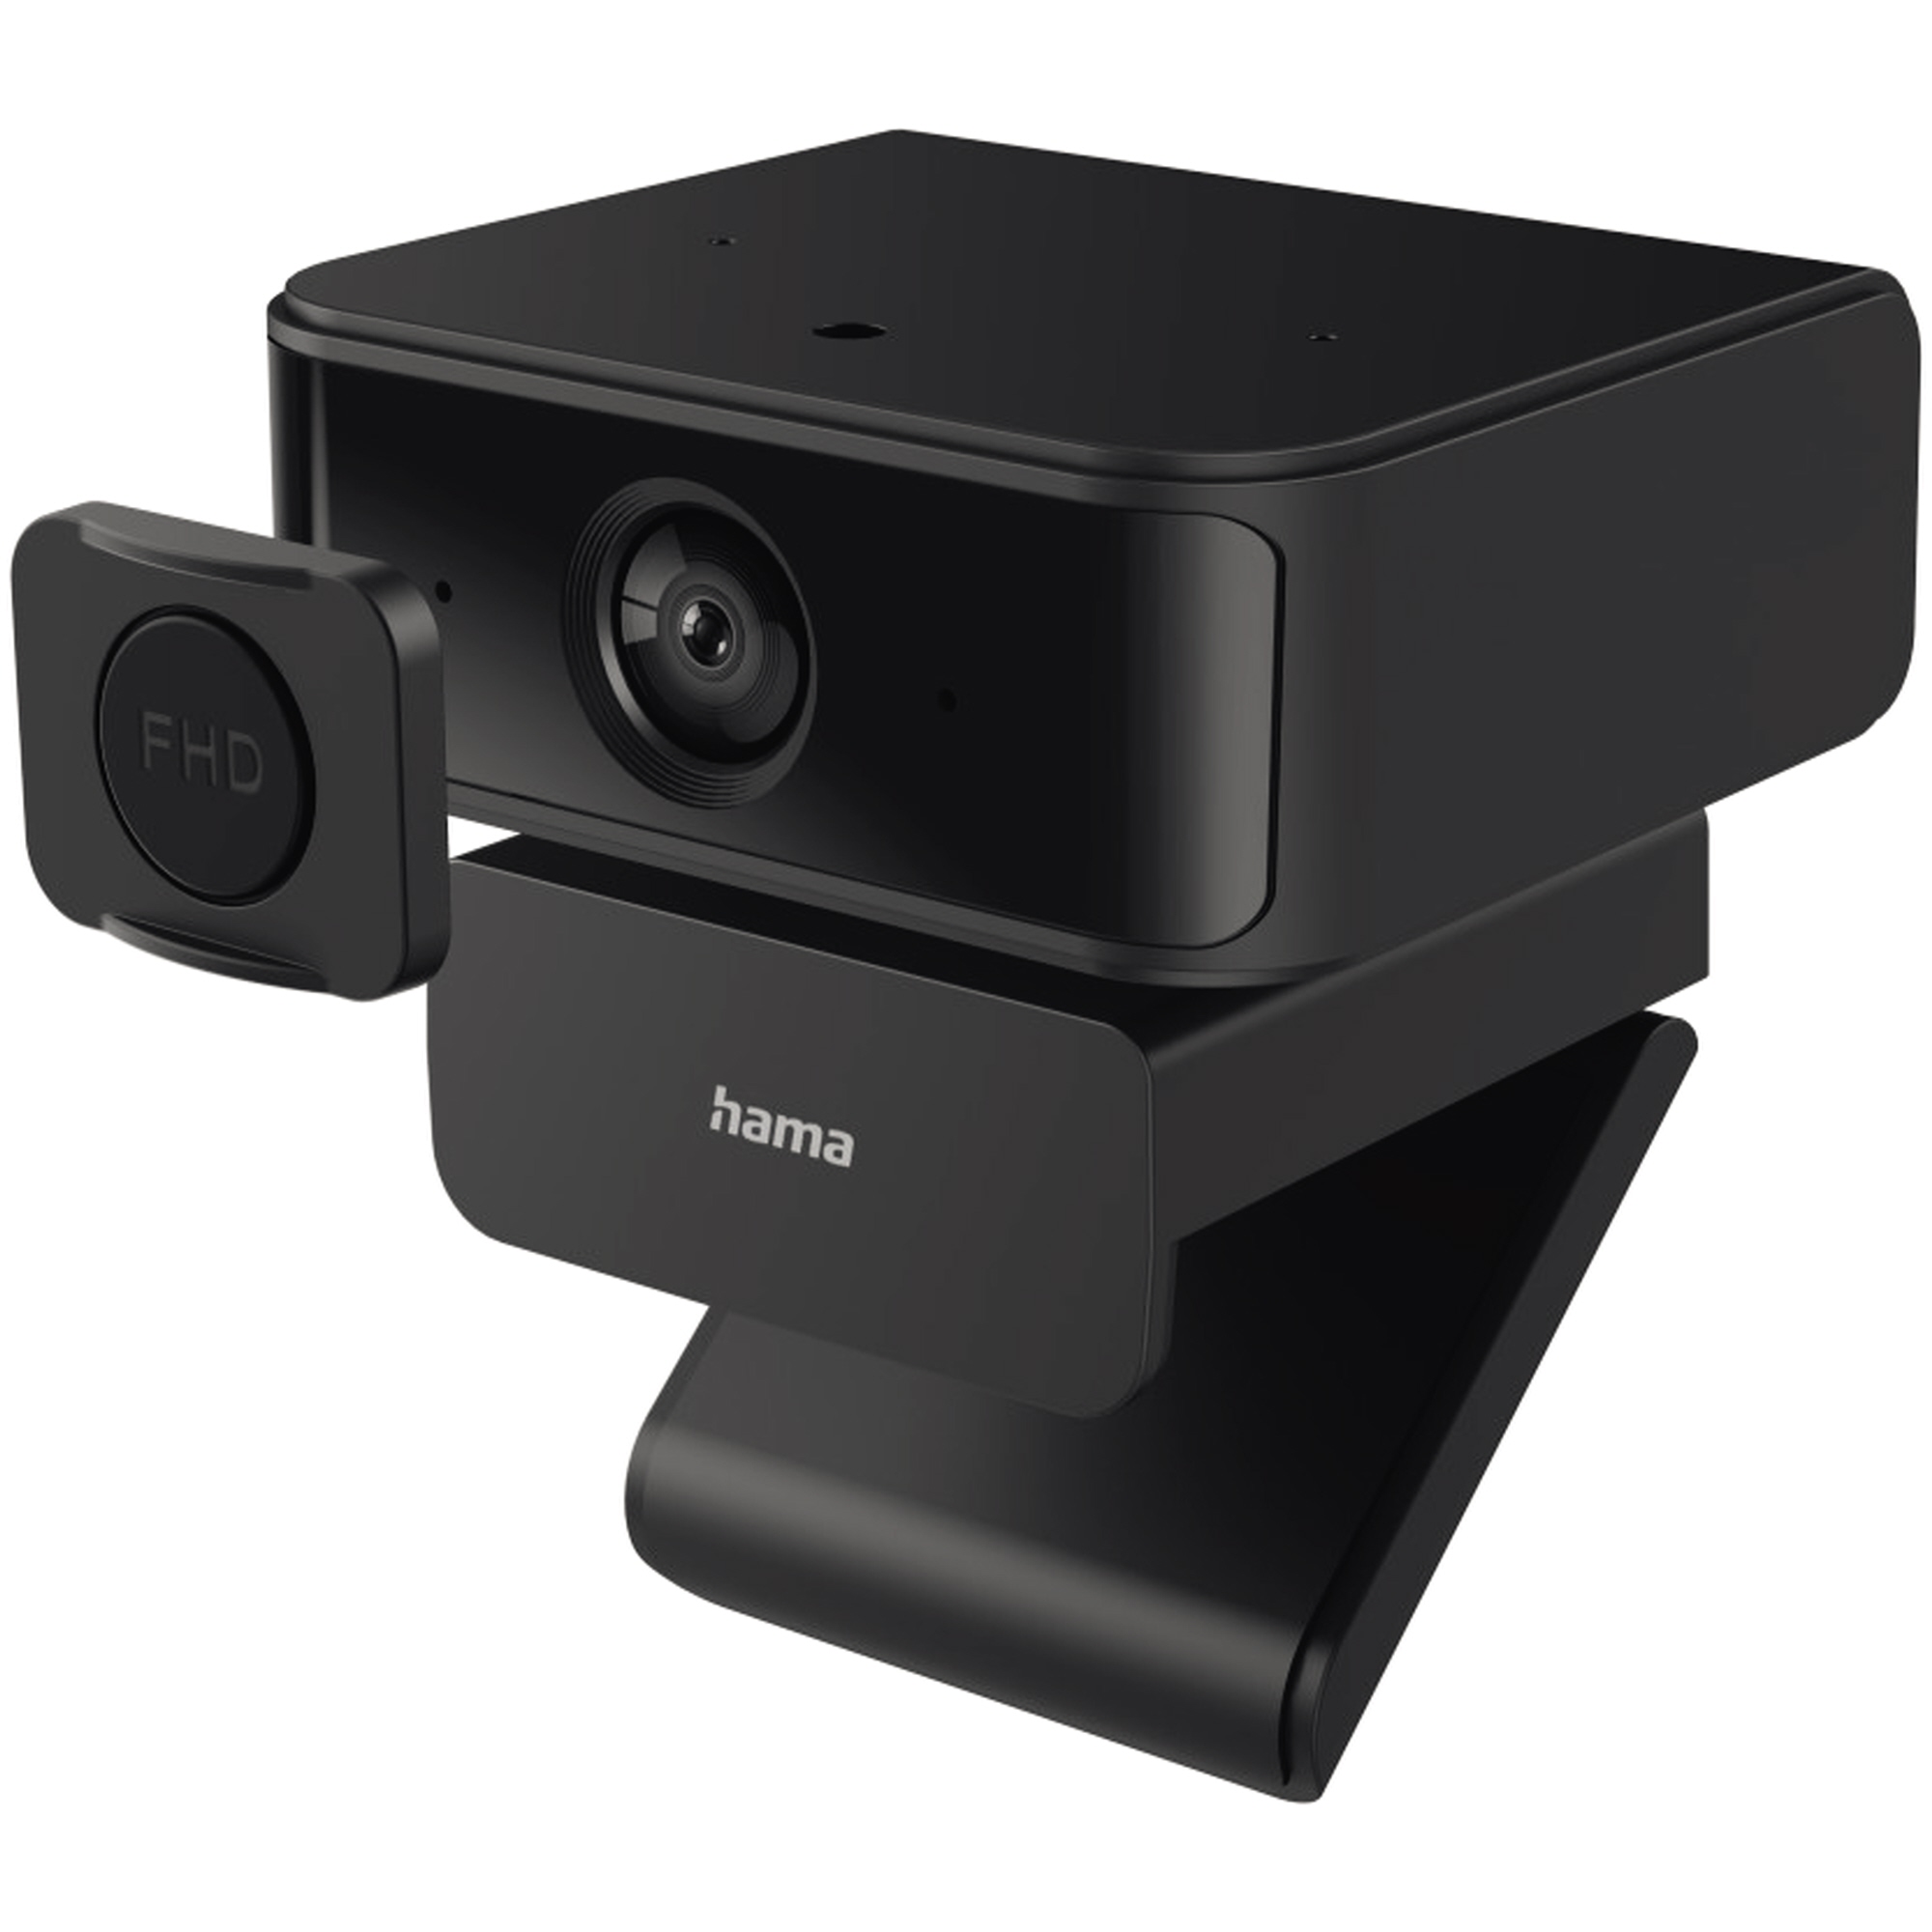 HAMA Webcam C-650 FHD USB 3.0 1920 x 1080 schwarz